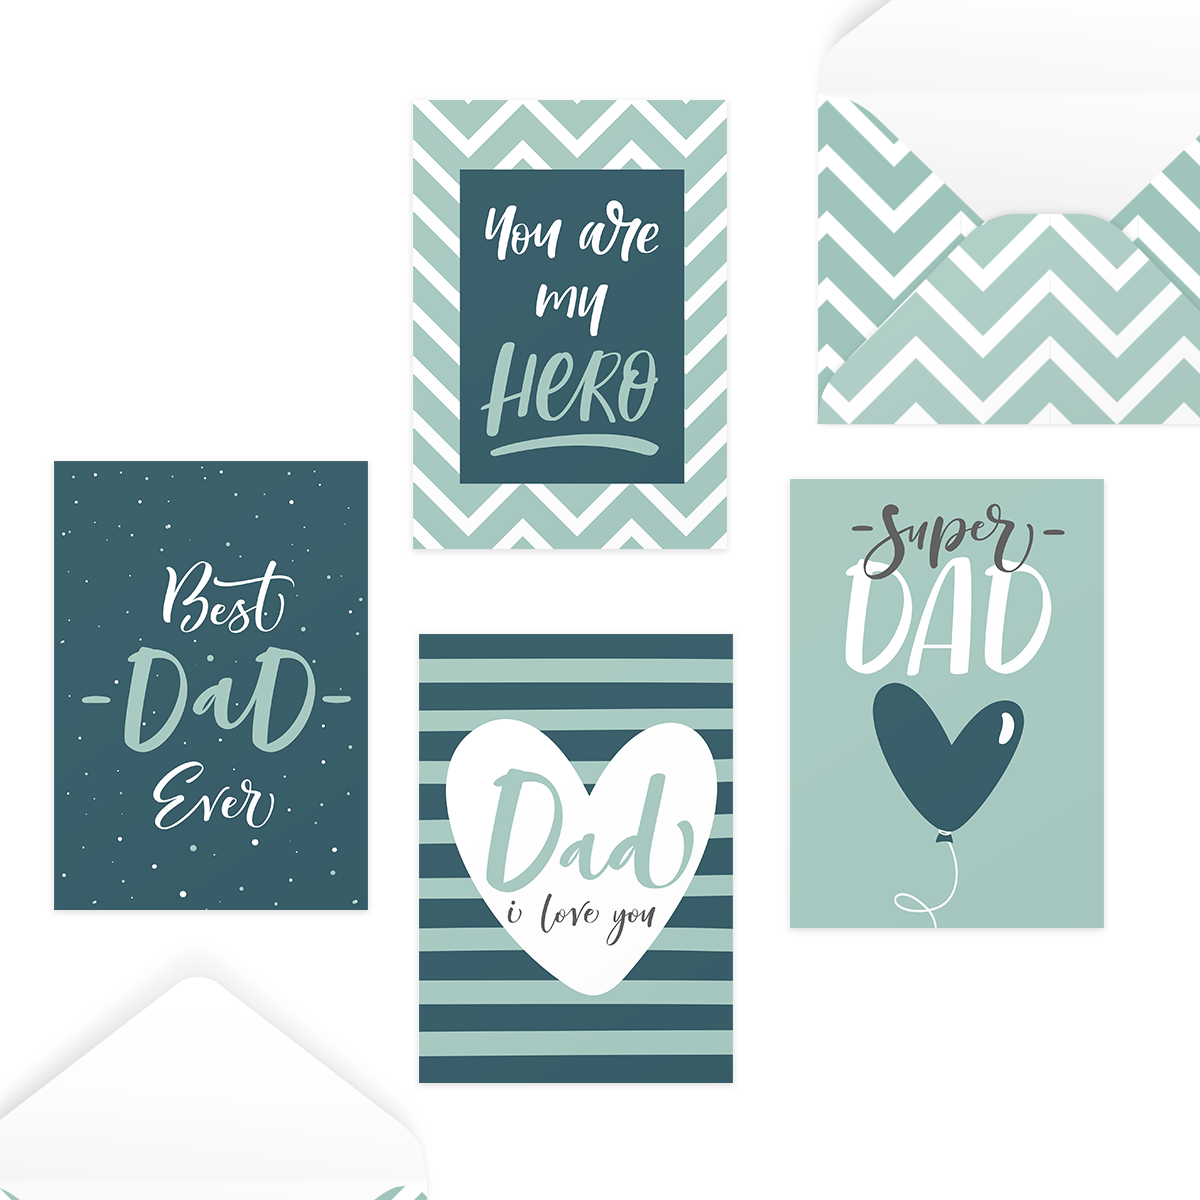 Bộ 4 thiệp 12,5x17,6 SDstationery TEAL LOVE FOR DAD pattern trái tim typography tặng bố ngày của cha father’s day,Vu Lan